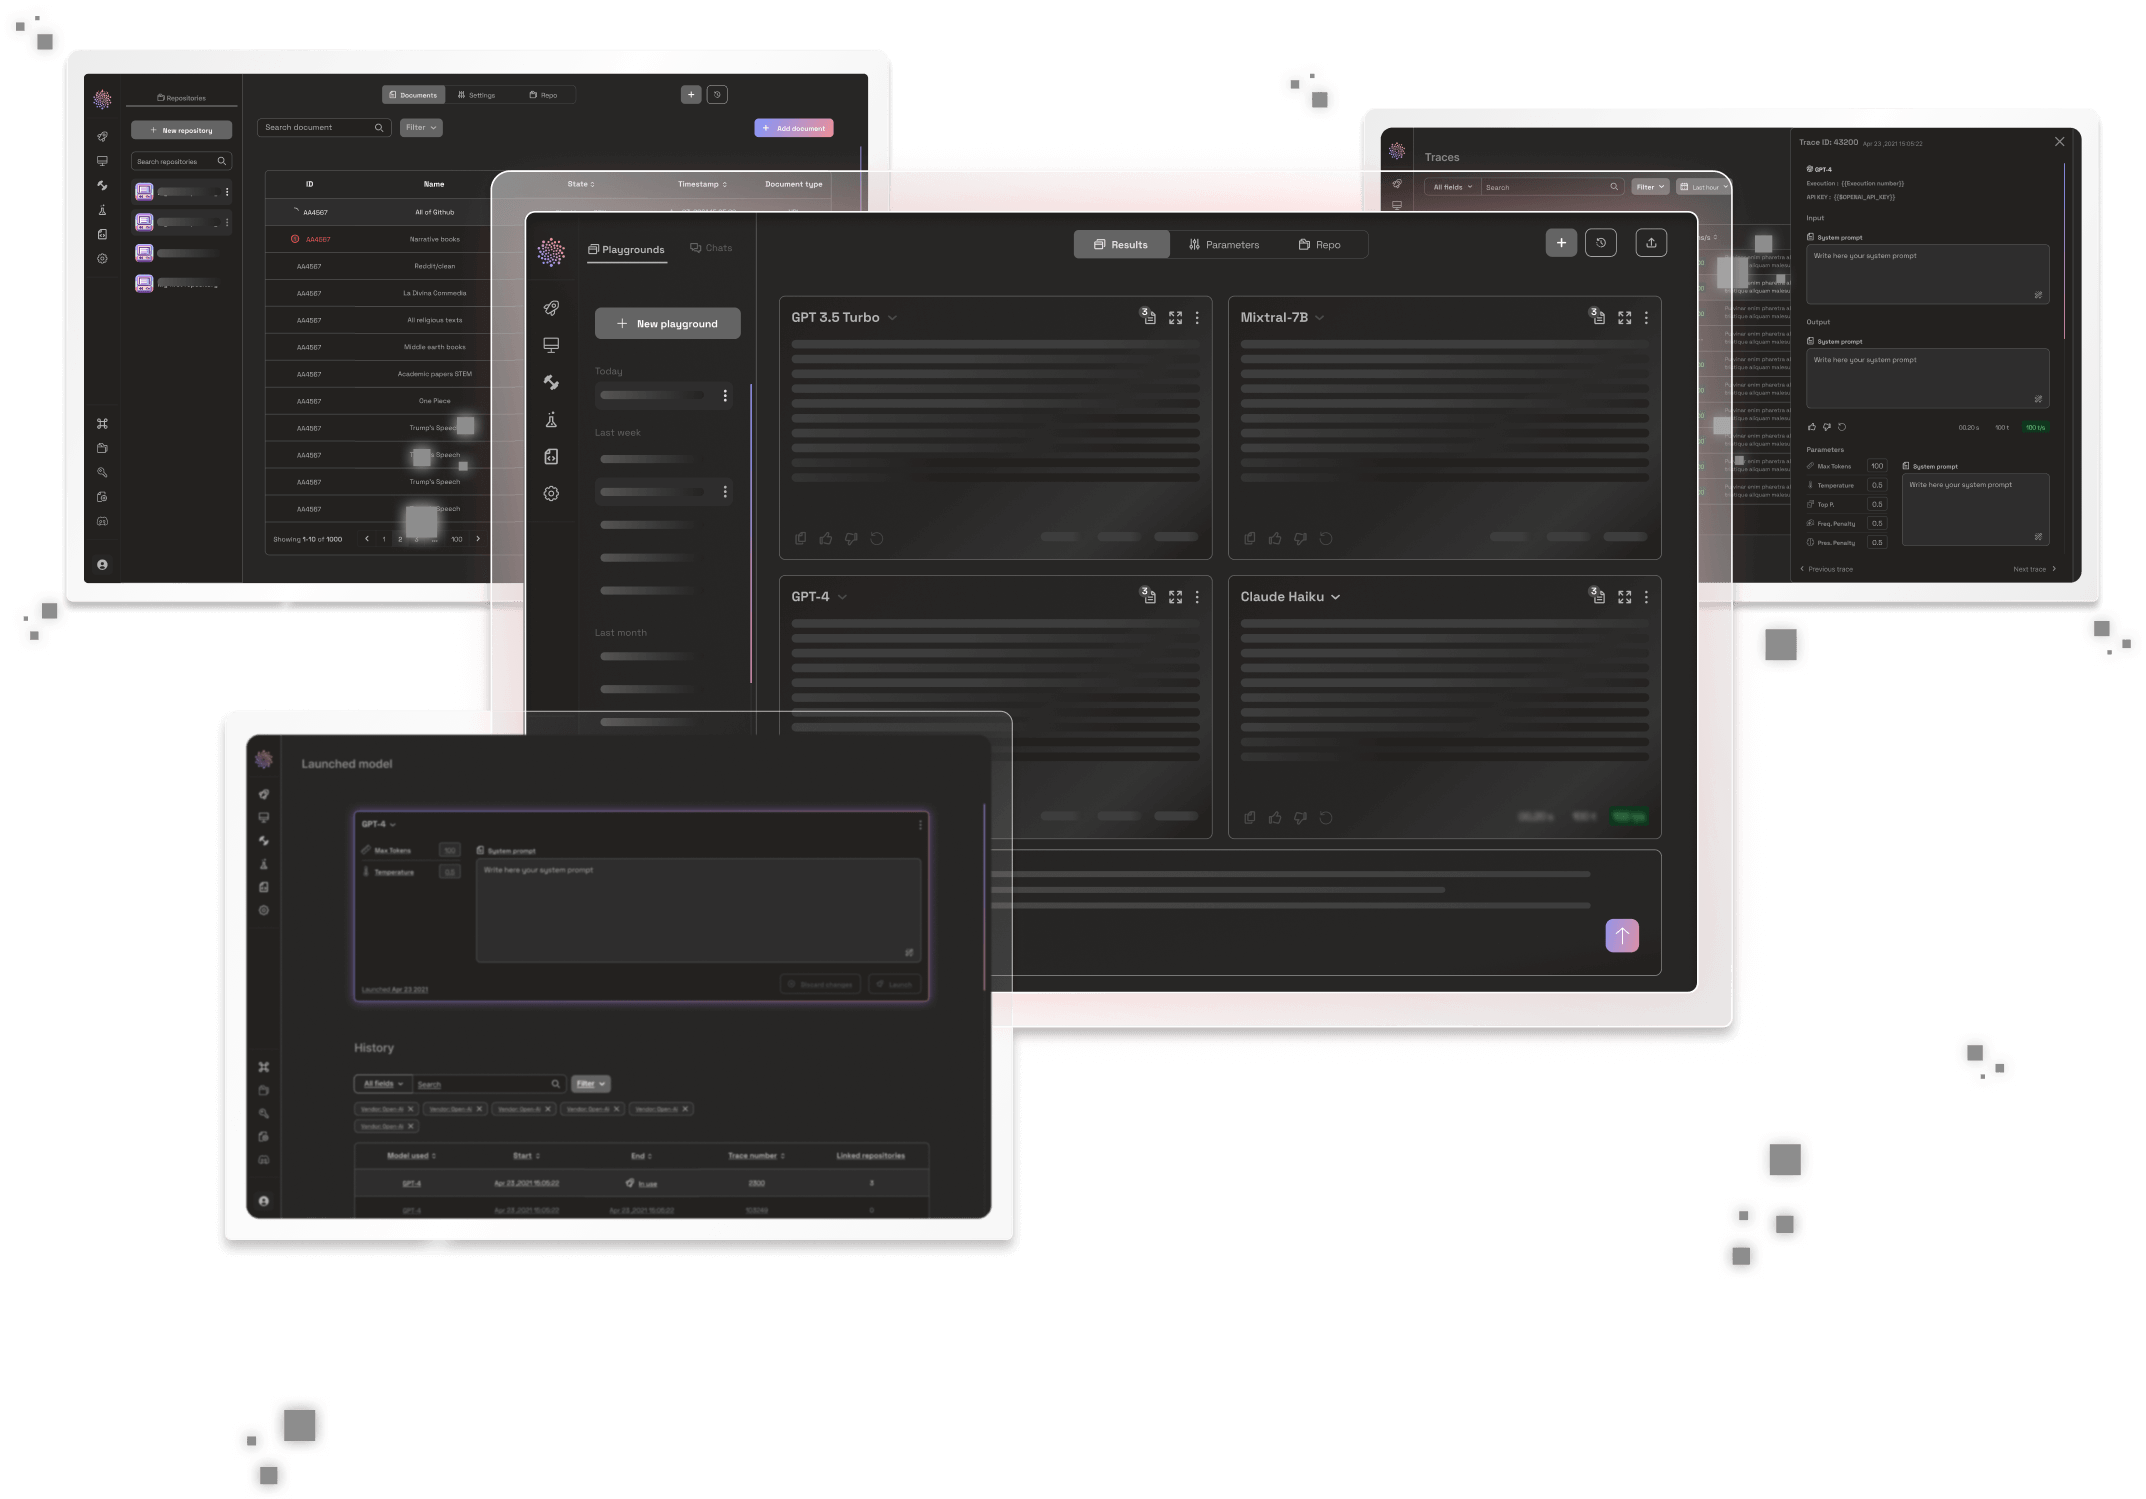 Developer Platform screens overview